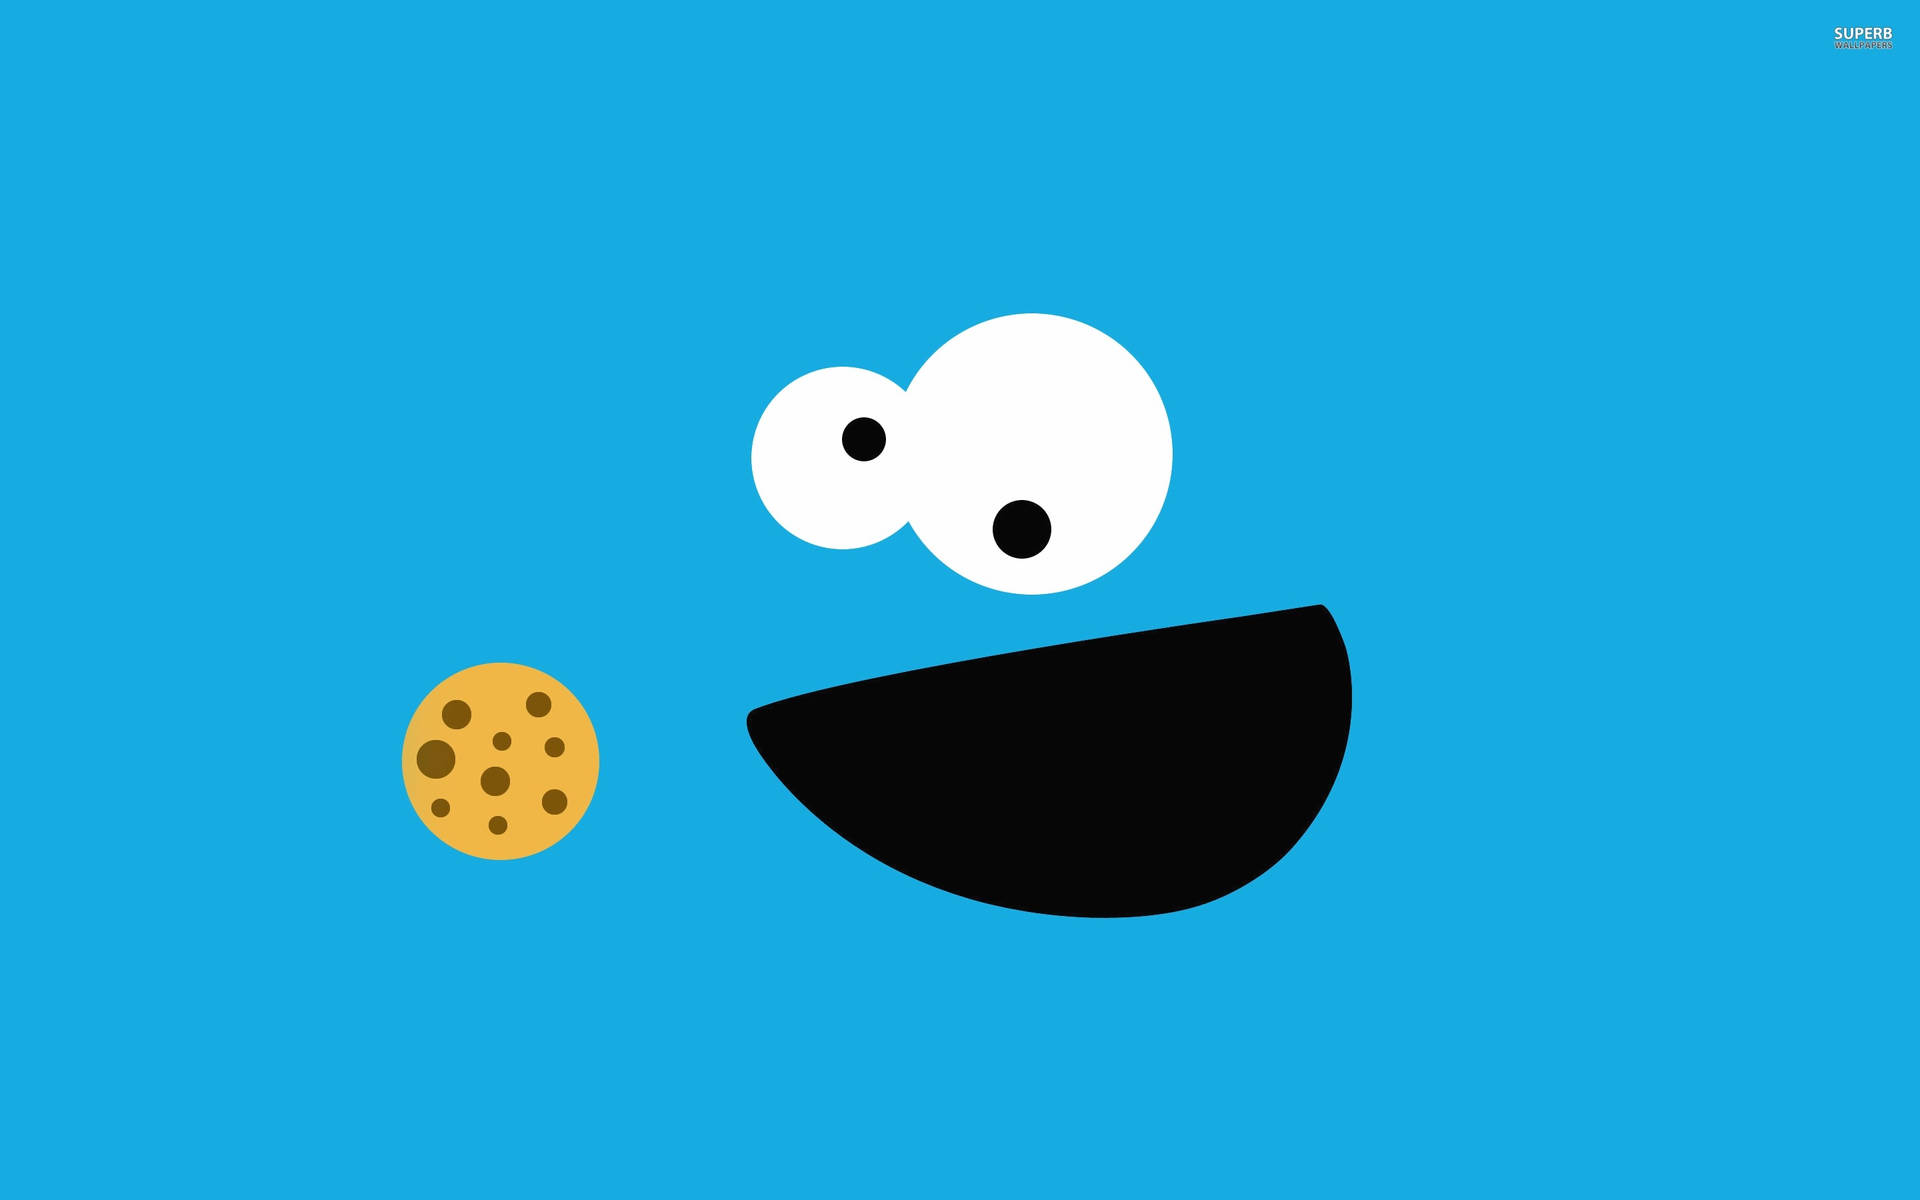 Free Cartoon Cookie Wallpaper Downloads, [100+] Cartoon Cookie Wallpapers  for FREE 